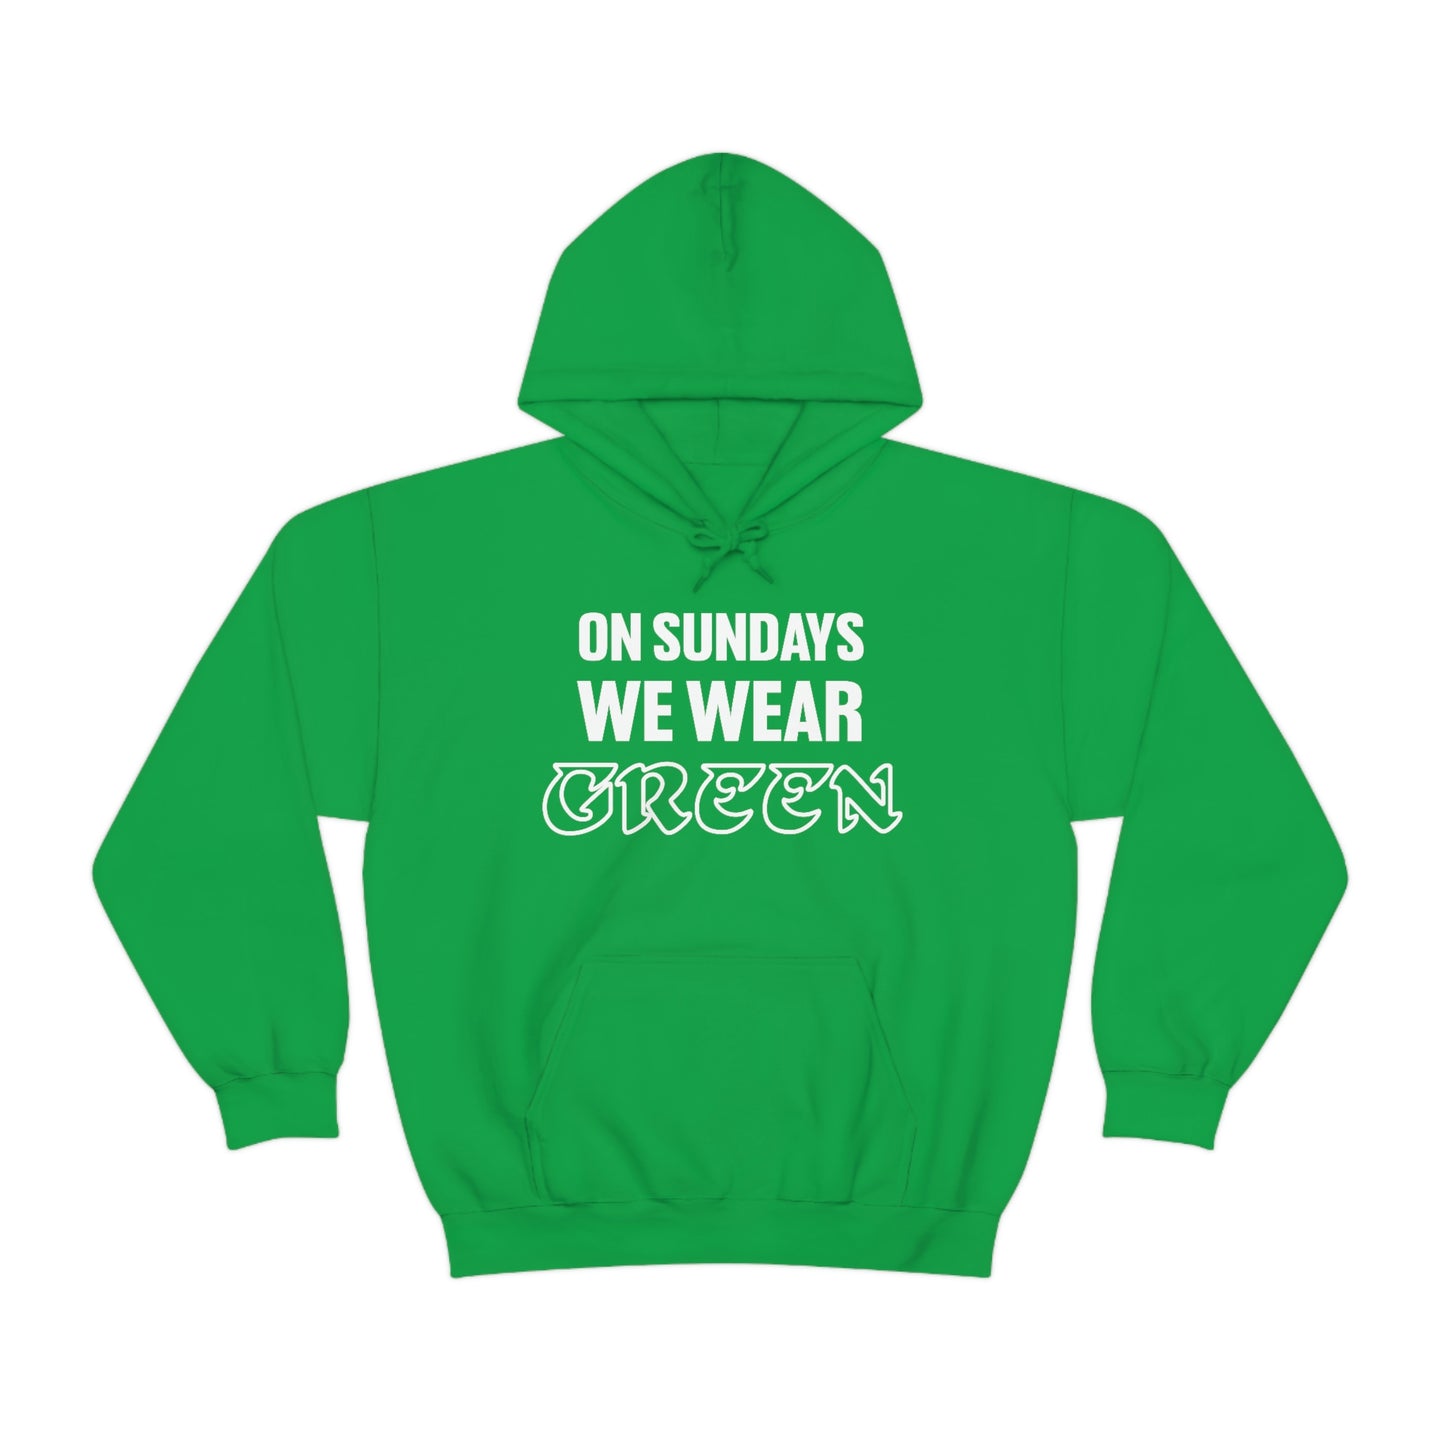 On Sundays We Wear Green Hoodie | Philadelphia Football Hoodie | Premium Unisex Hooded Sweatshirt